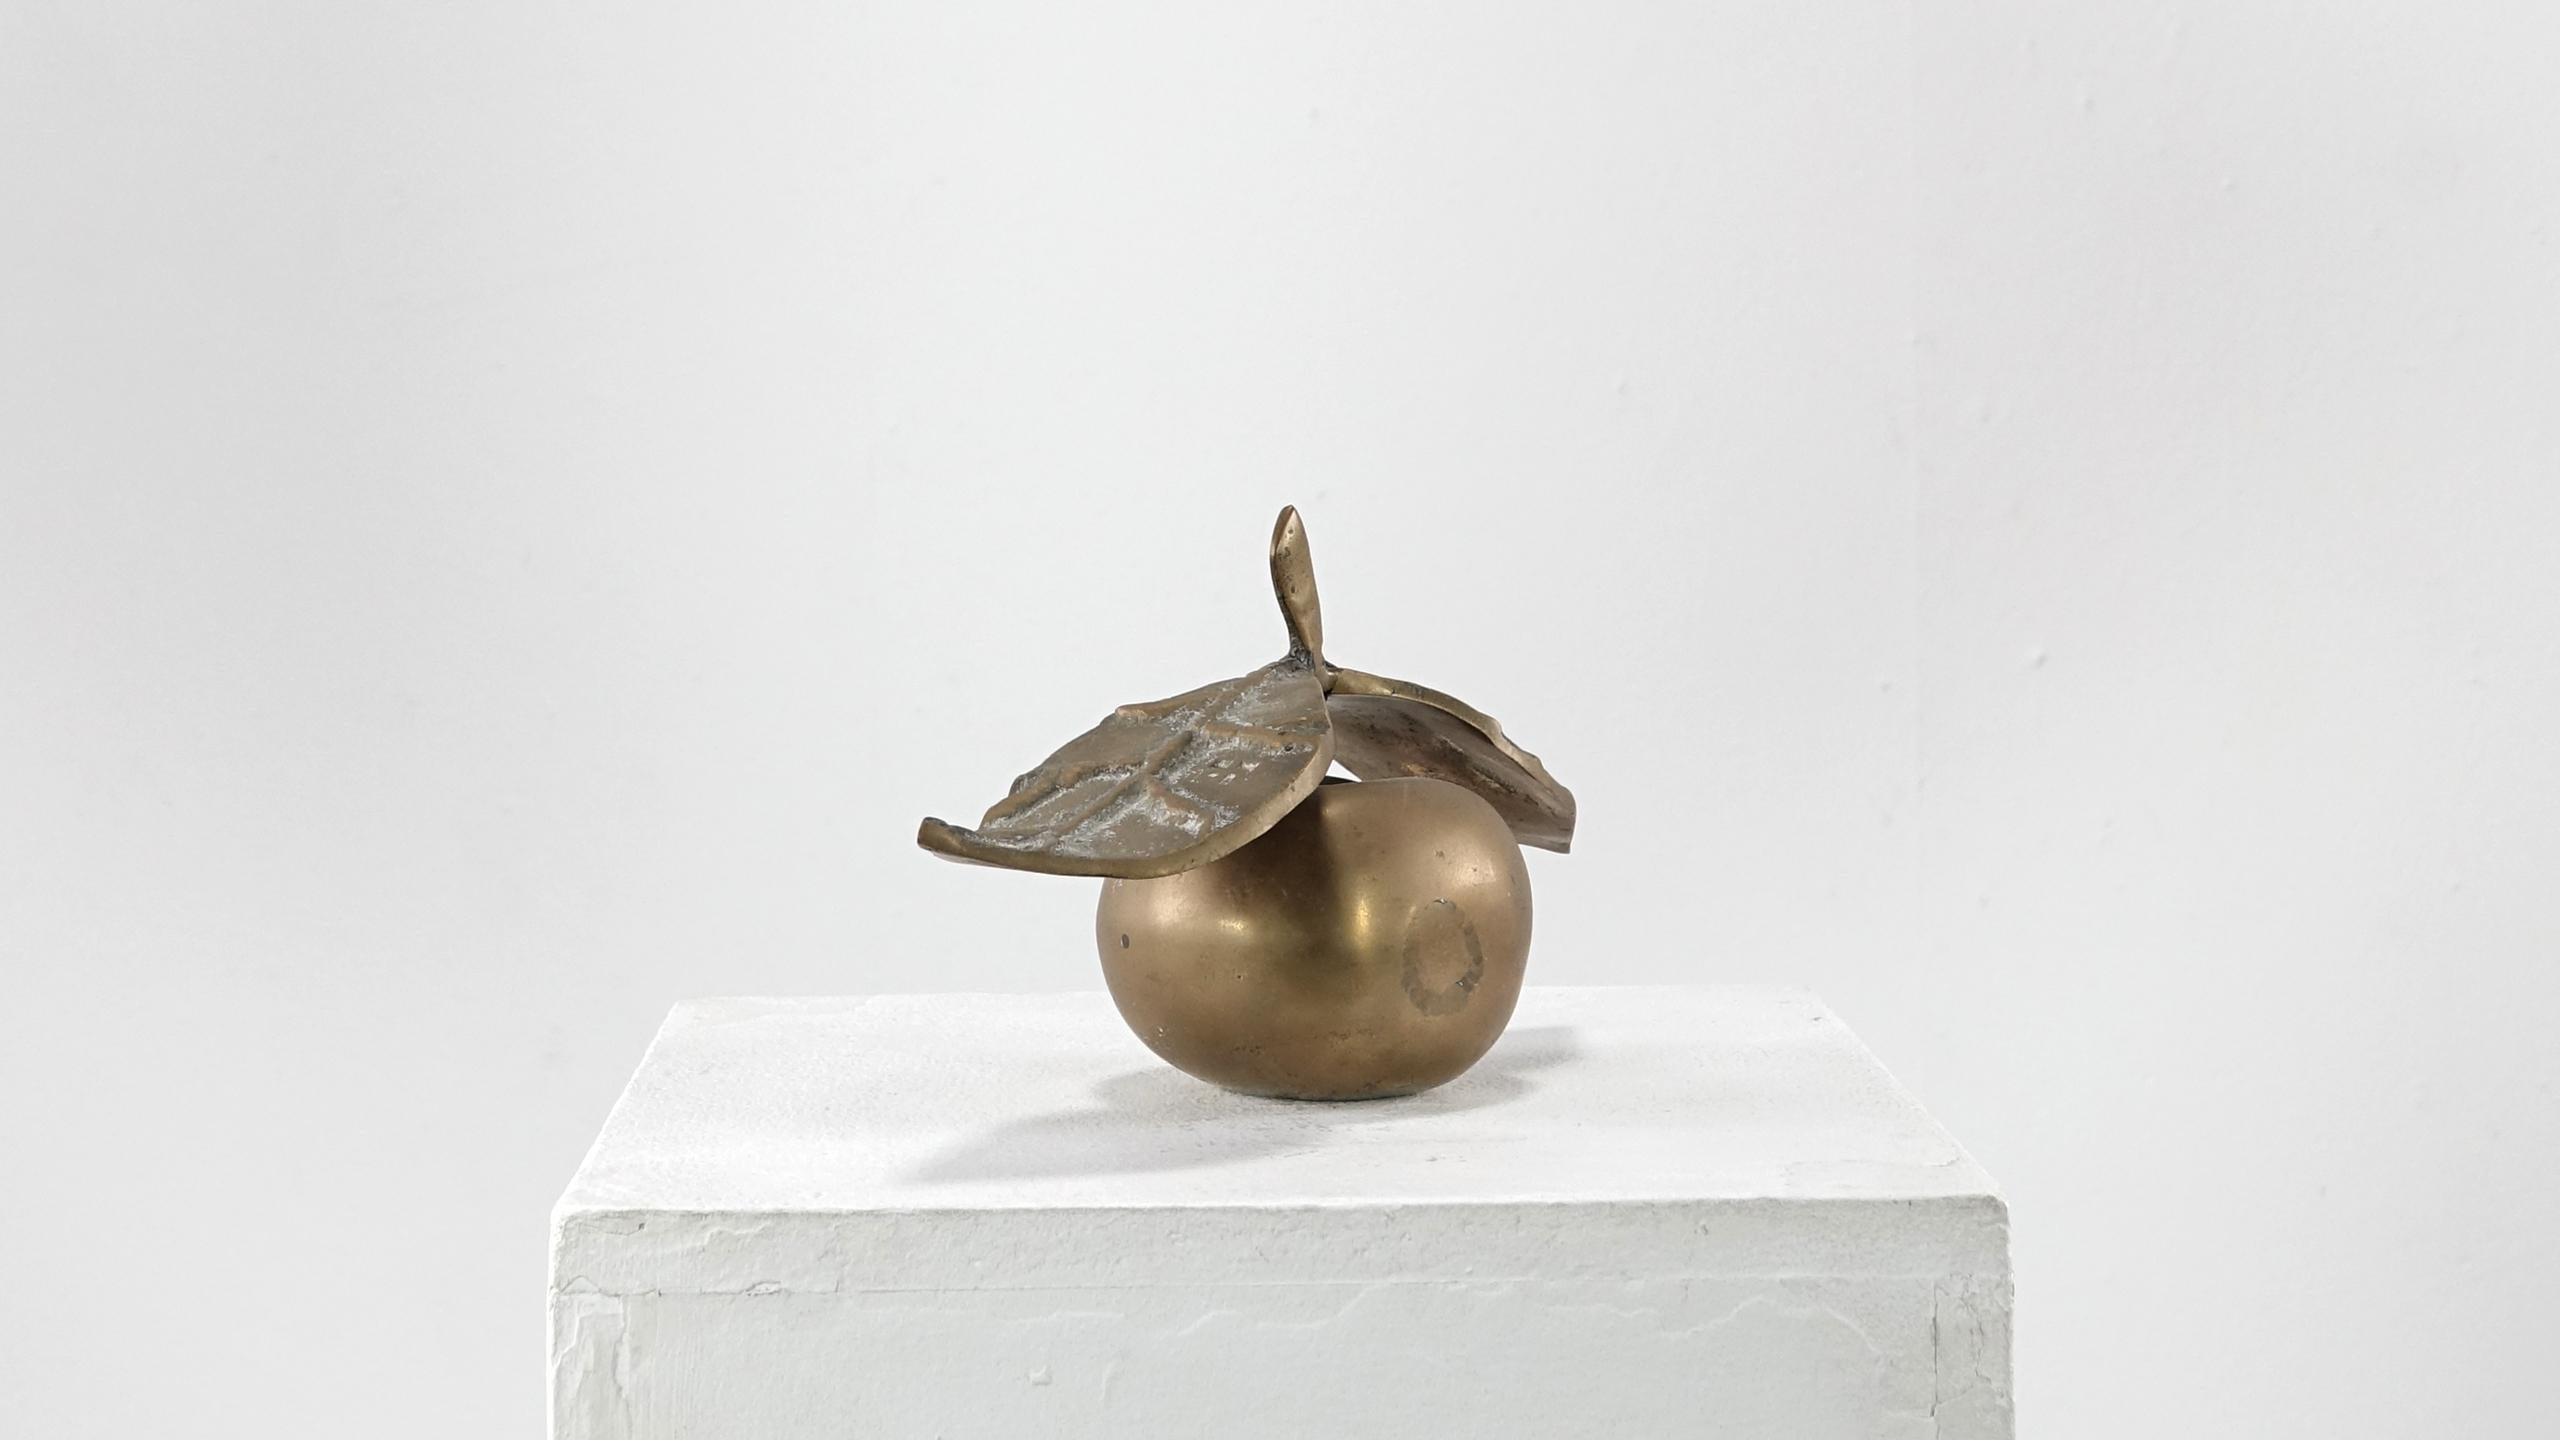 David Marshall Desenos Brass Apple Sculpture 1